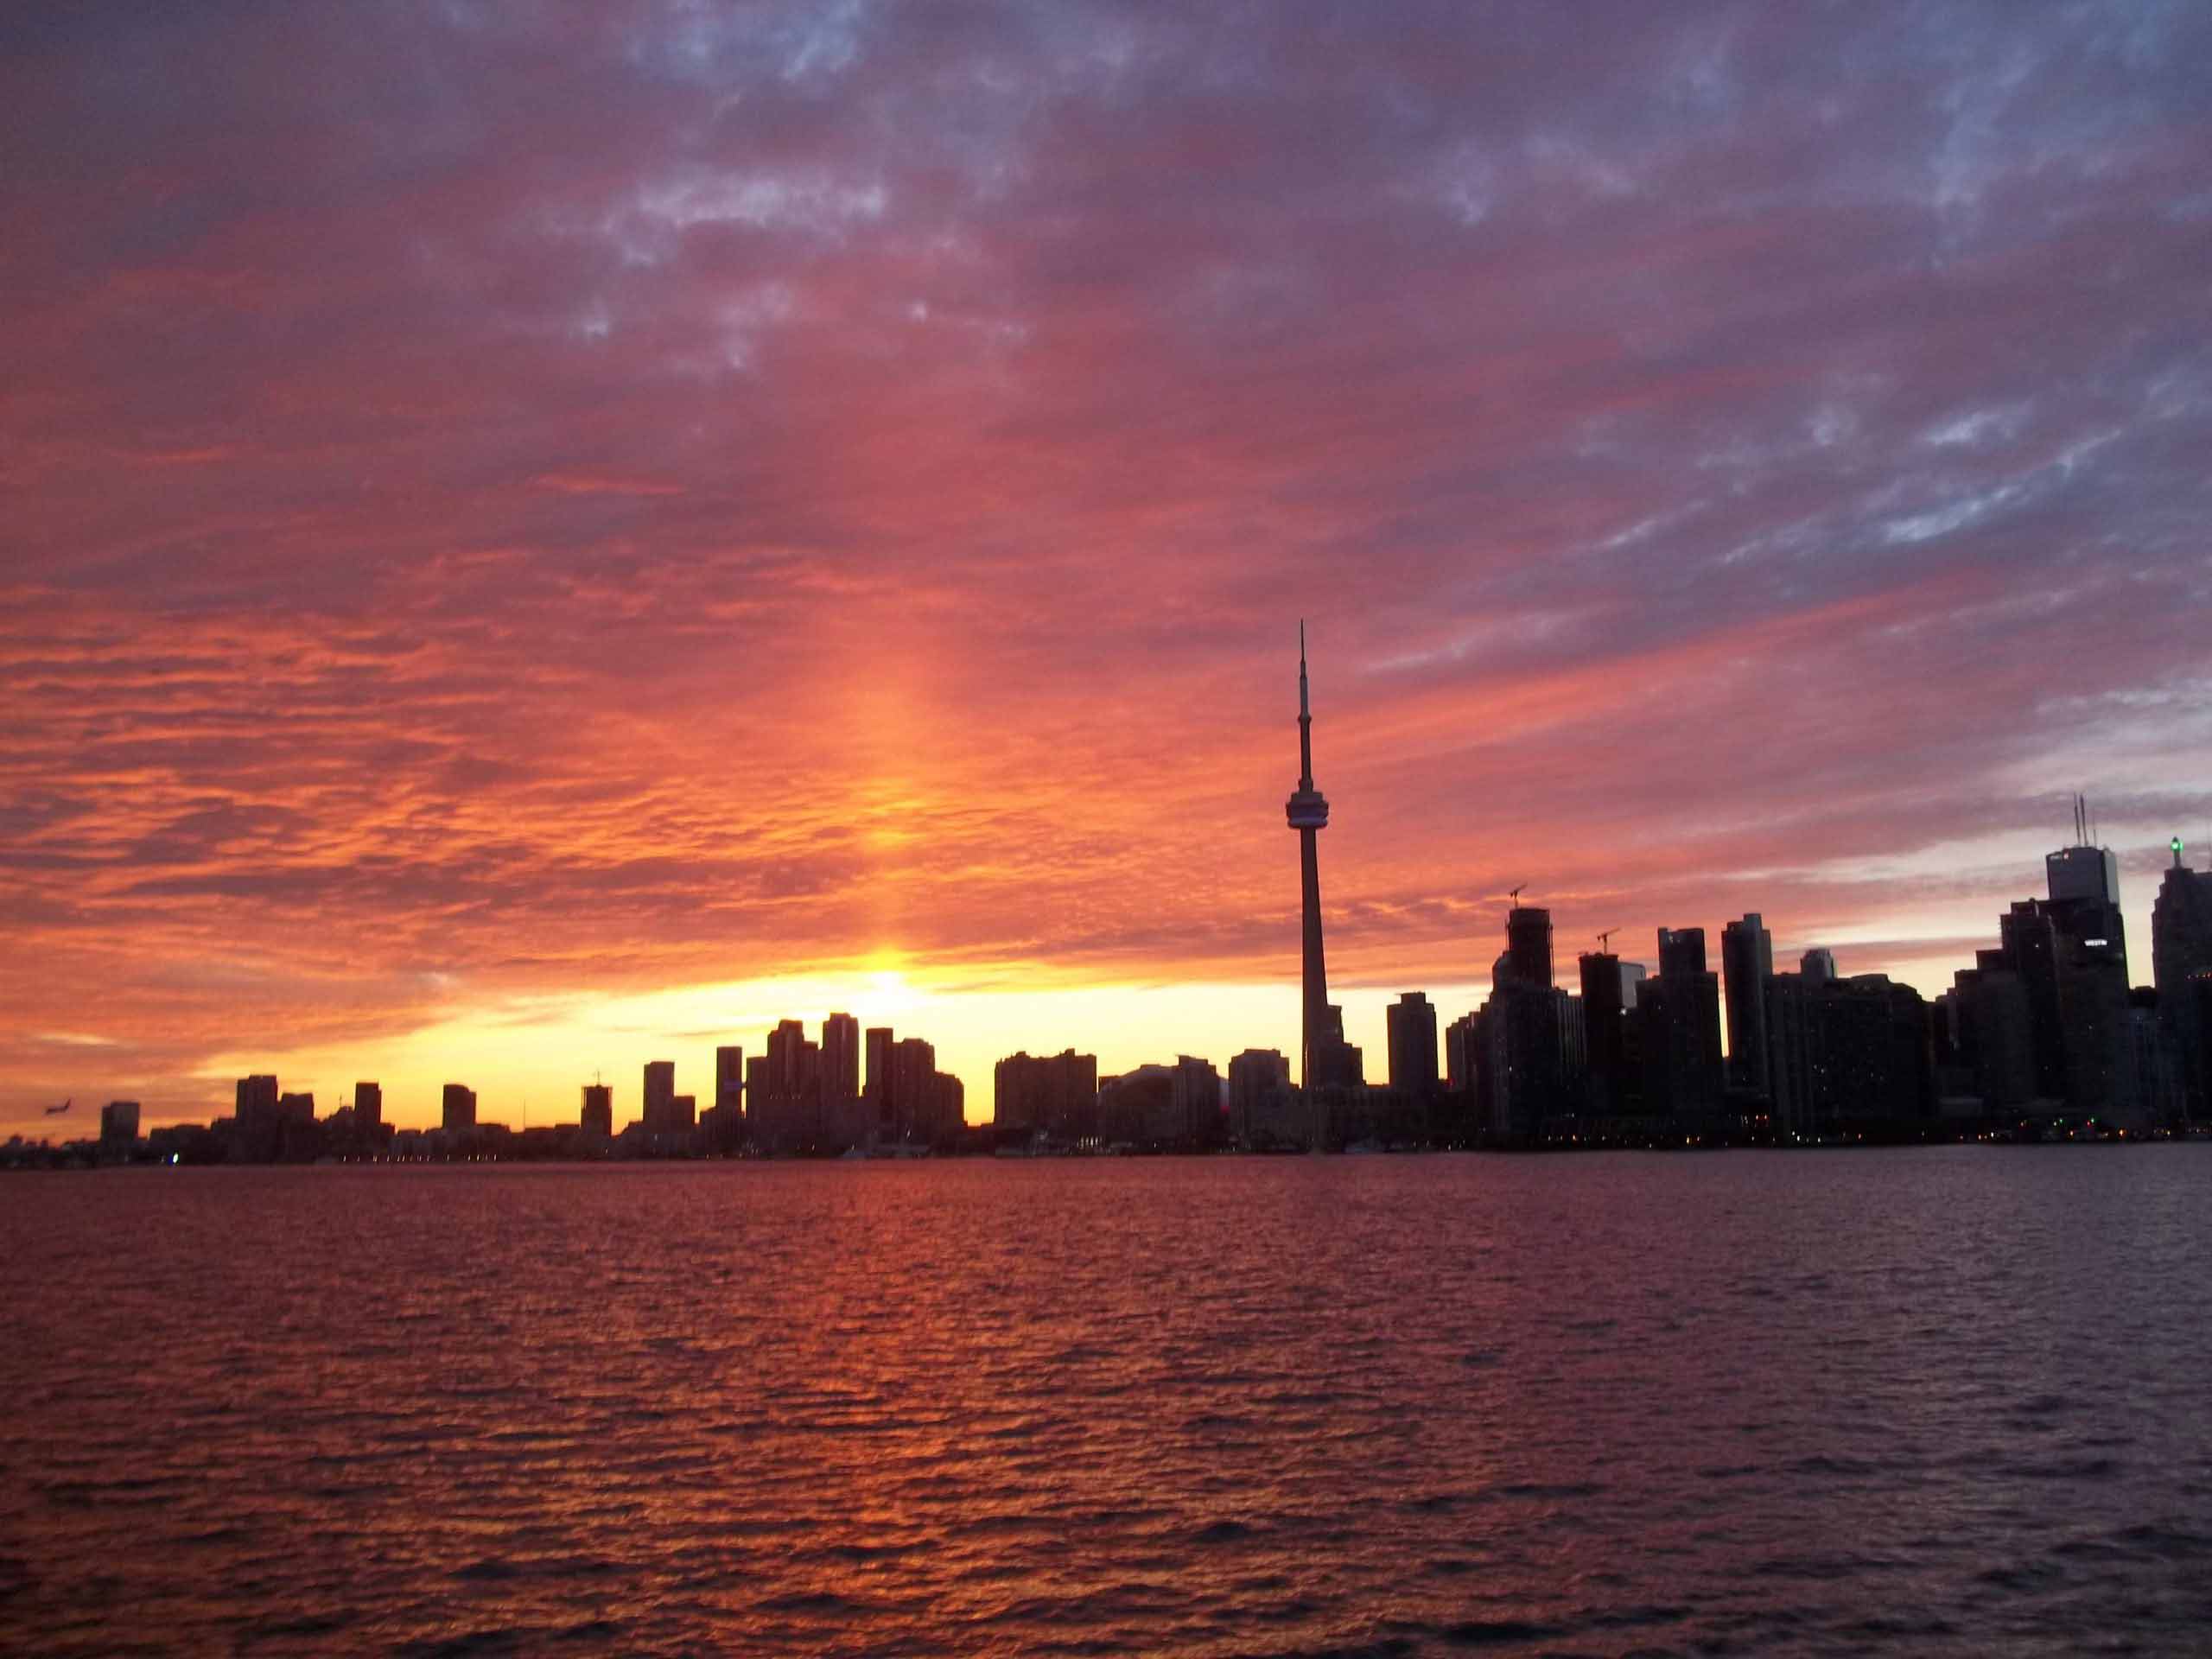 Toronto skyline at sunset.